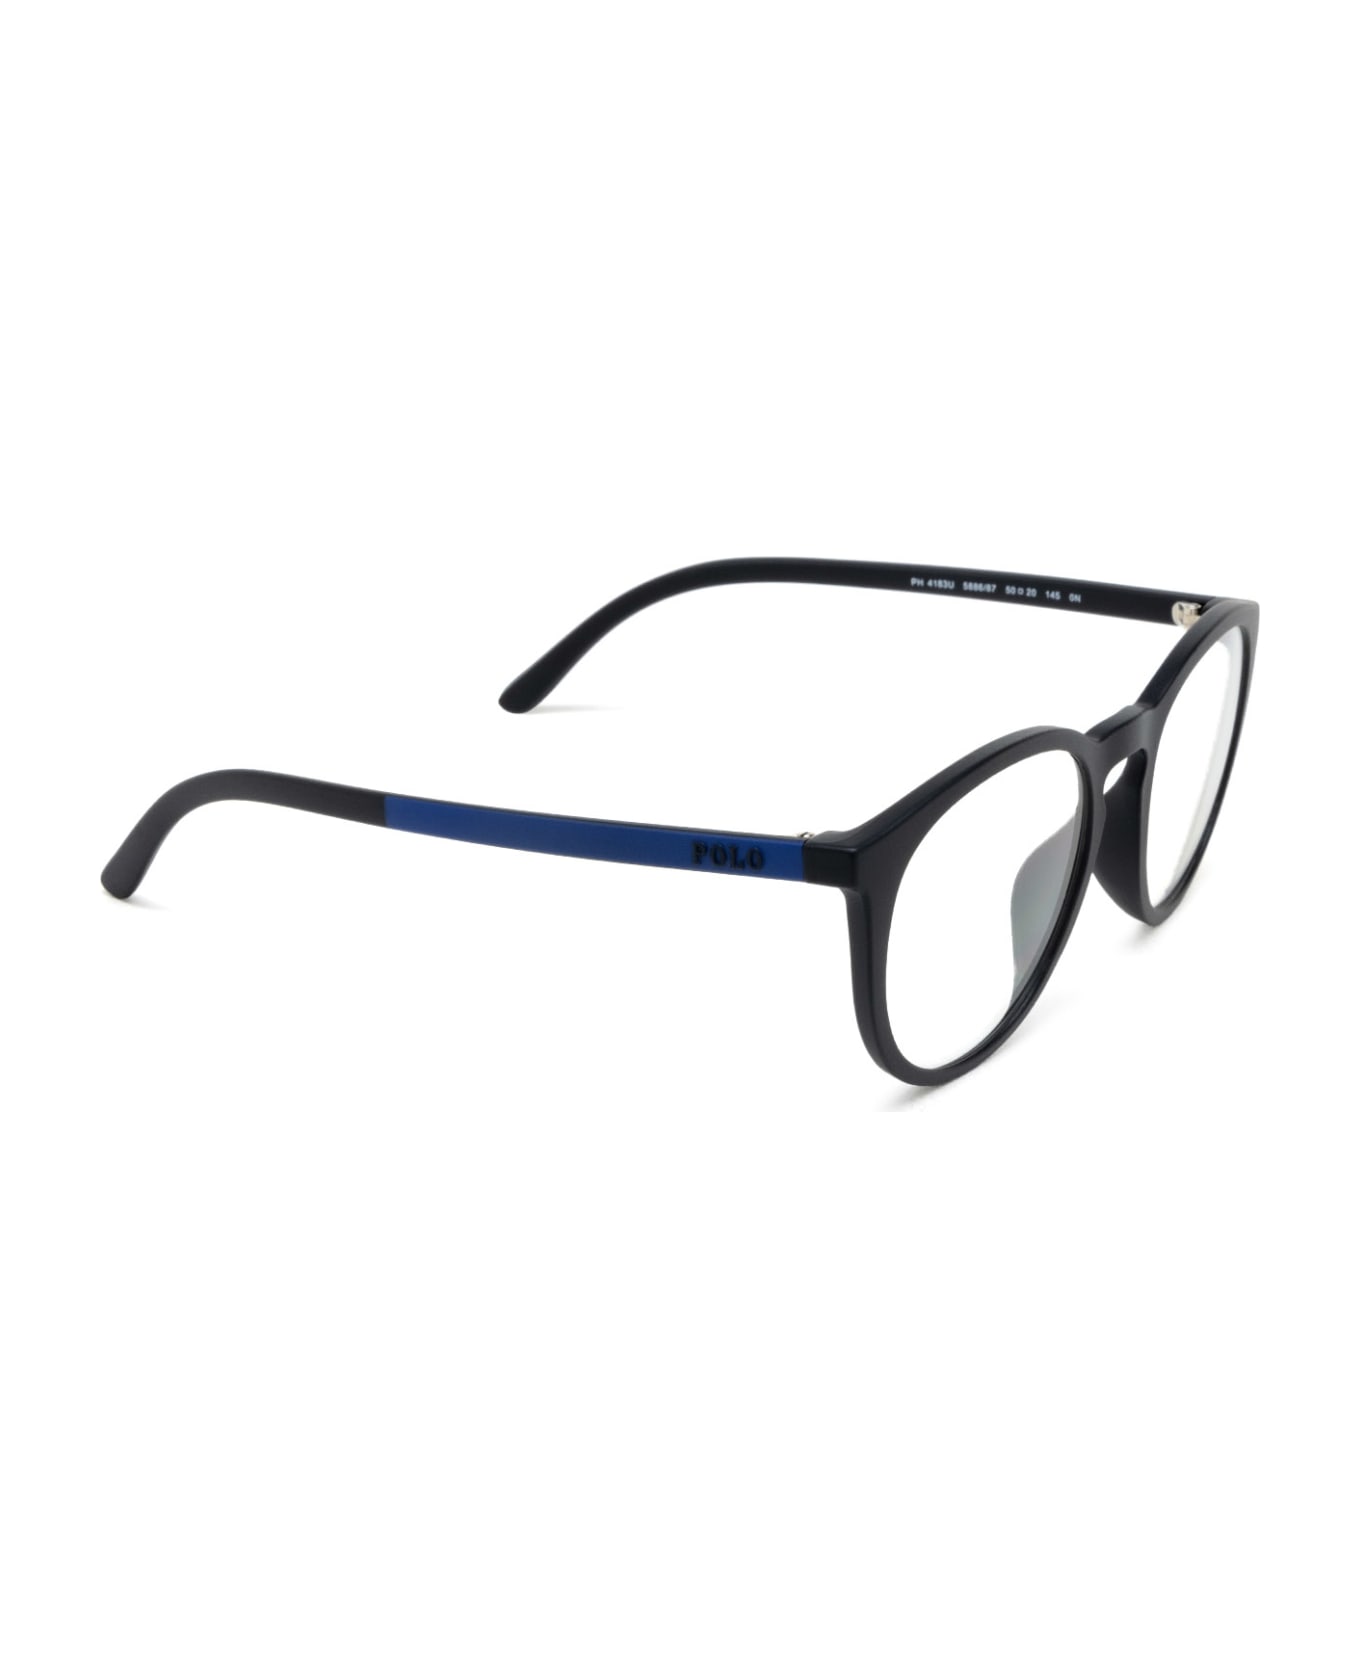 Polo Ralph Lauren Ph4183u Matte Black Sunglasses - Matte Black